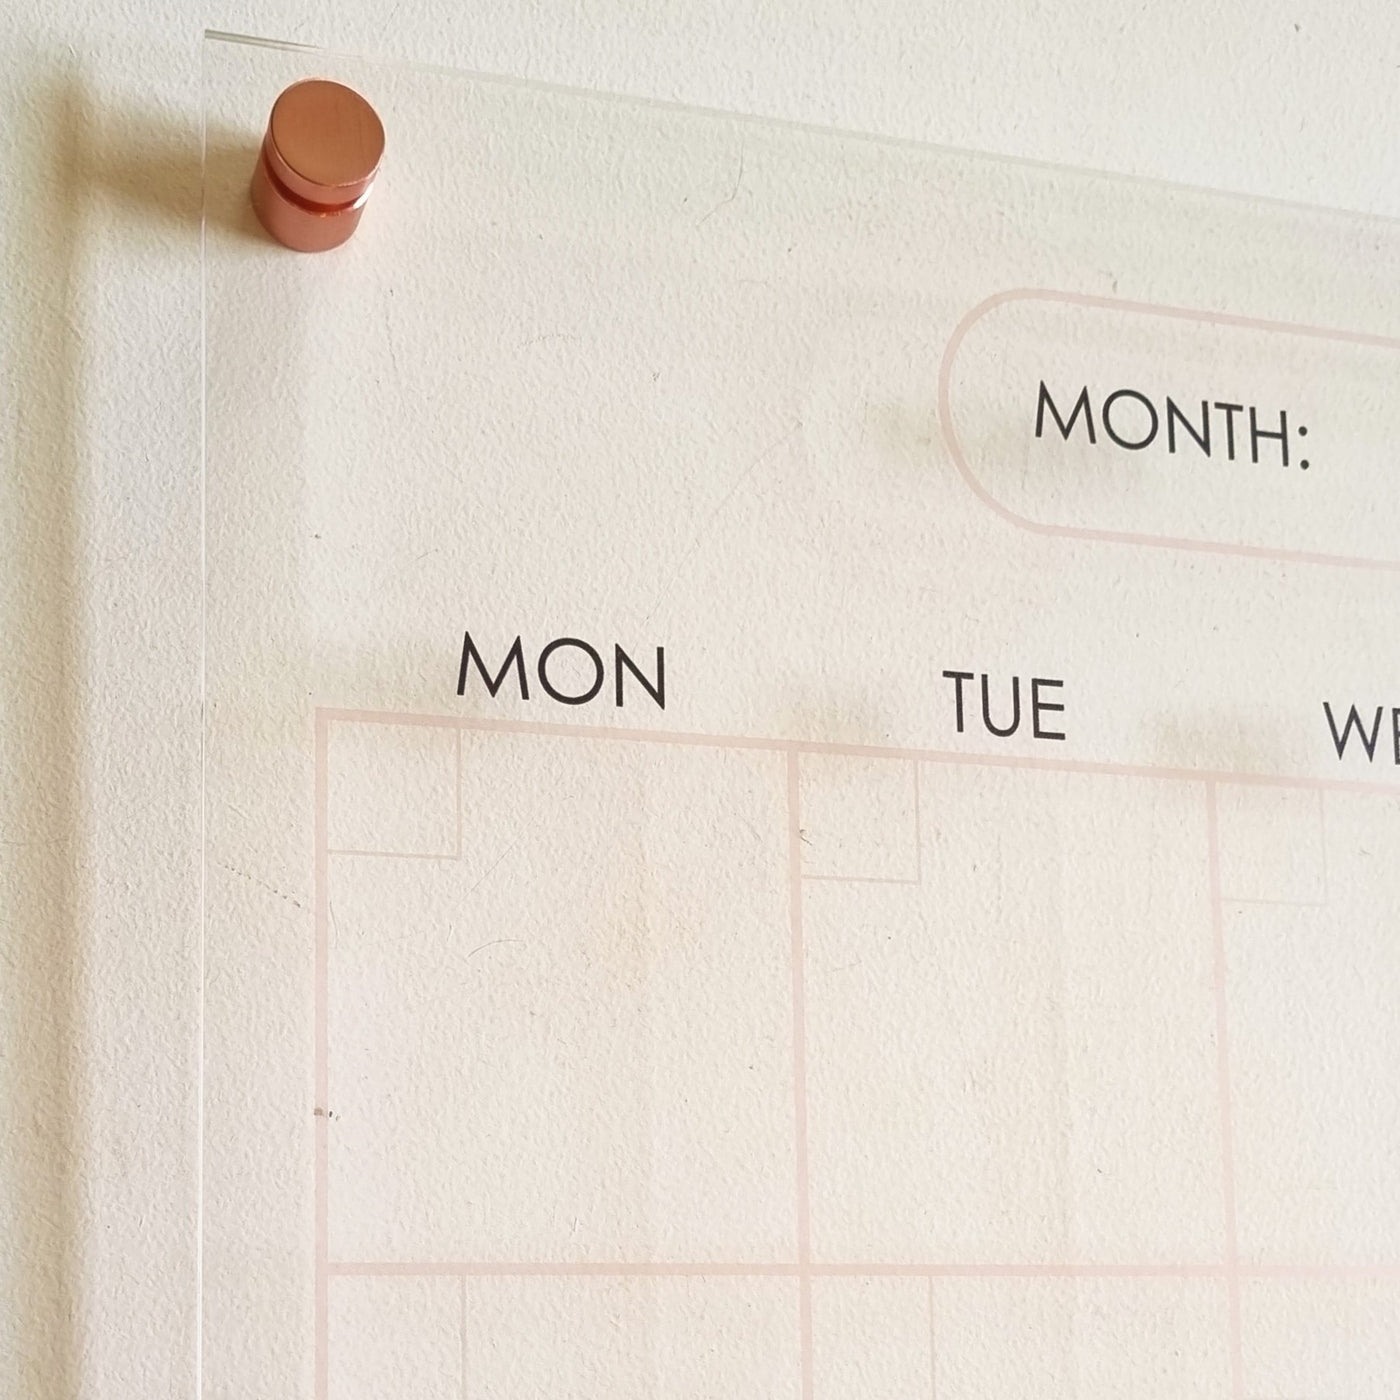 Acrylic Reusable Wall Calendar Planner in Pink Print